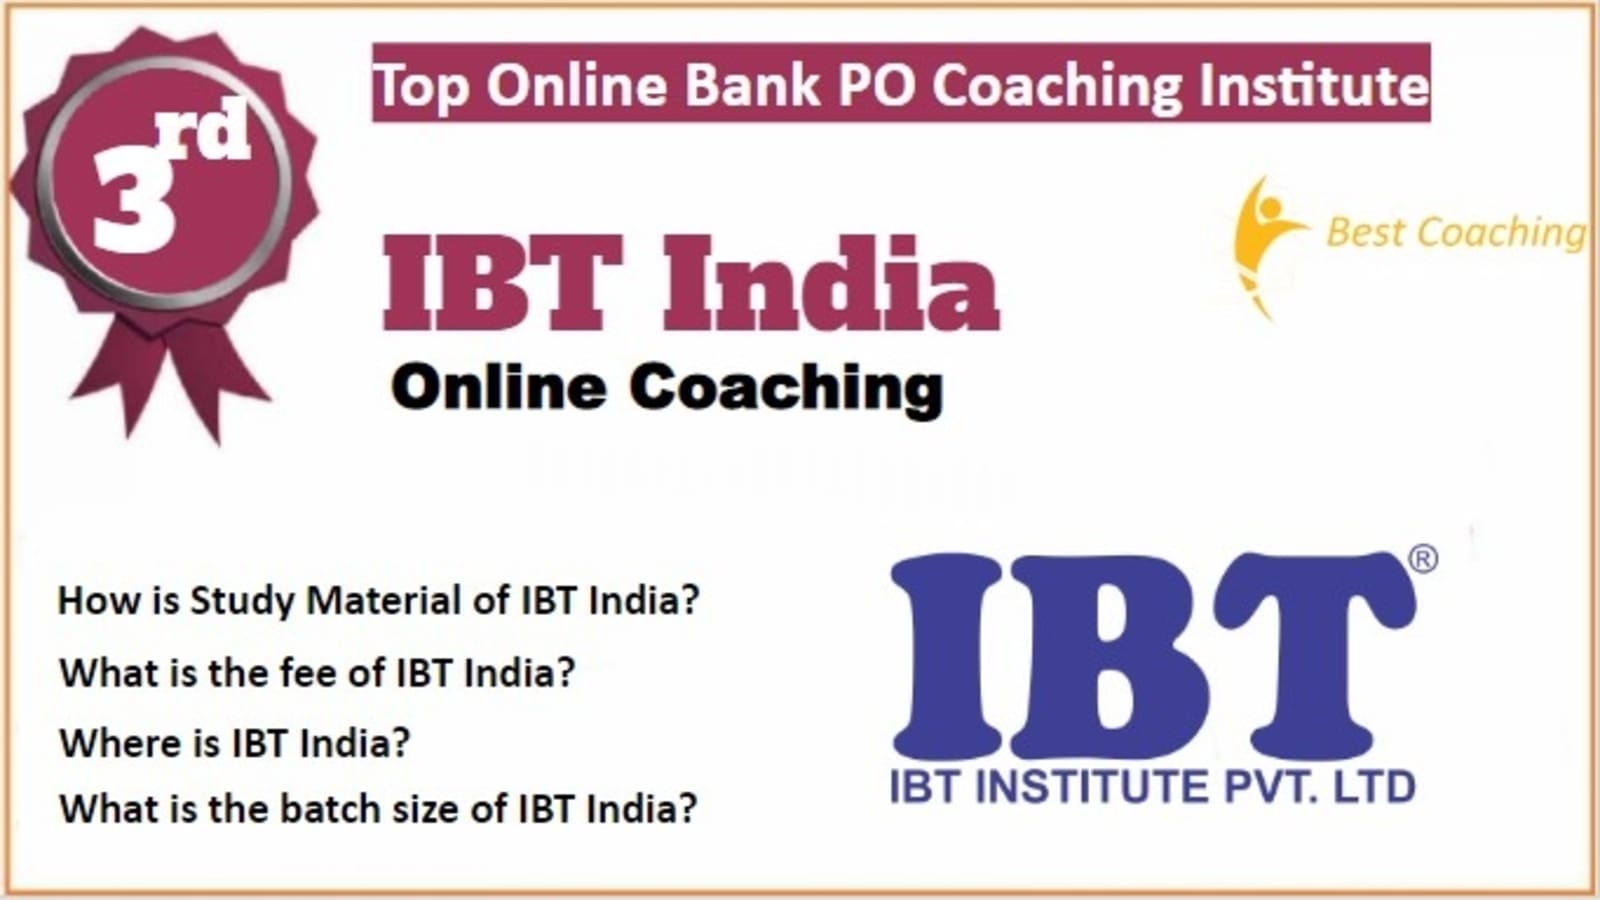 Rank 3 Best Online Bank PO Coaching